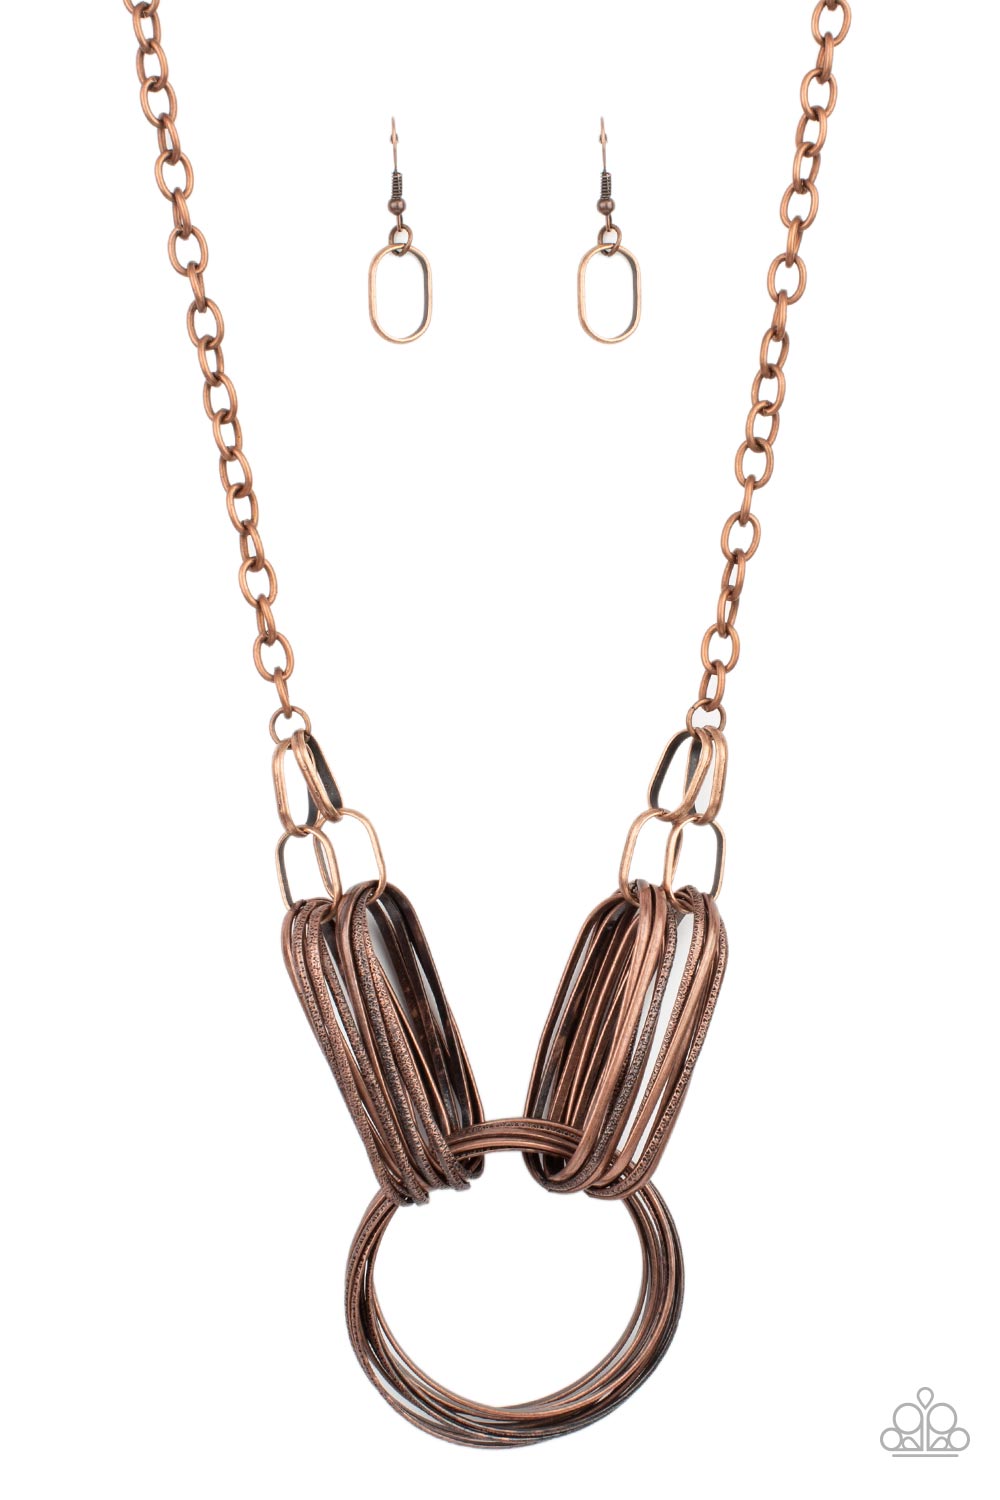 Lip Sync Links - Copper Paparazzi Necklace